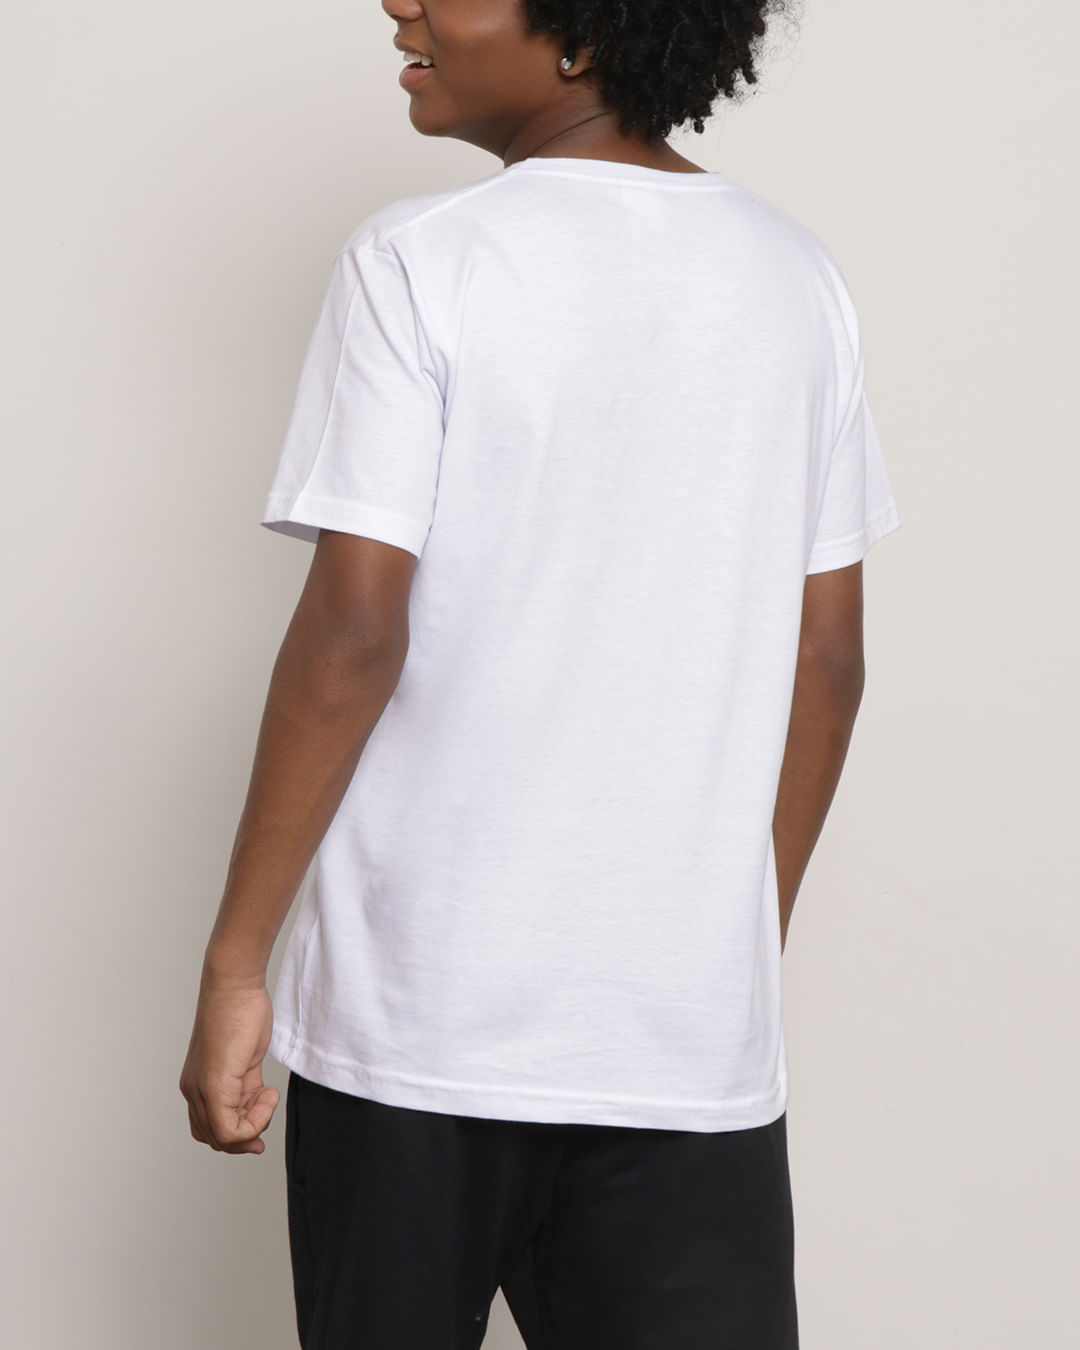 Camiseta-10-110-Mc-M-1016-Urbano---Branco